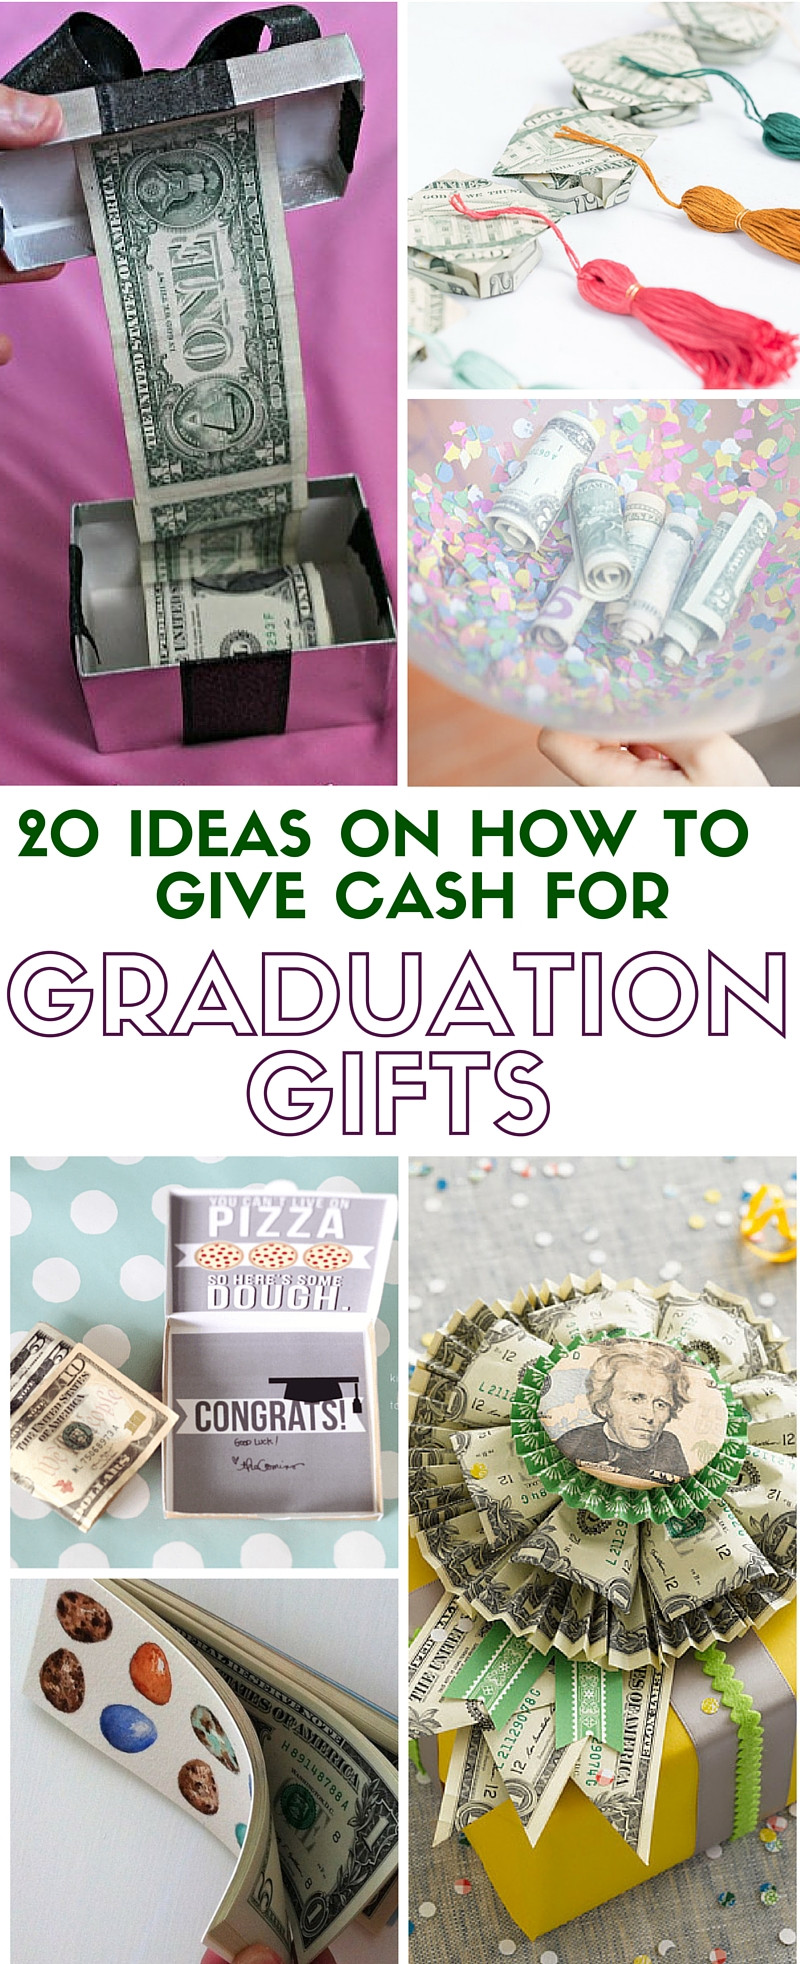 Great Graduation Gift Ideas
 31 Back To School Teacher Gift Ideas The Crafty Blog Stalker